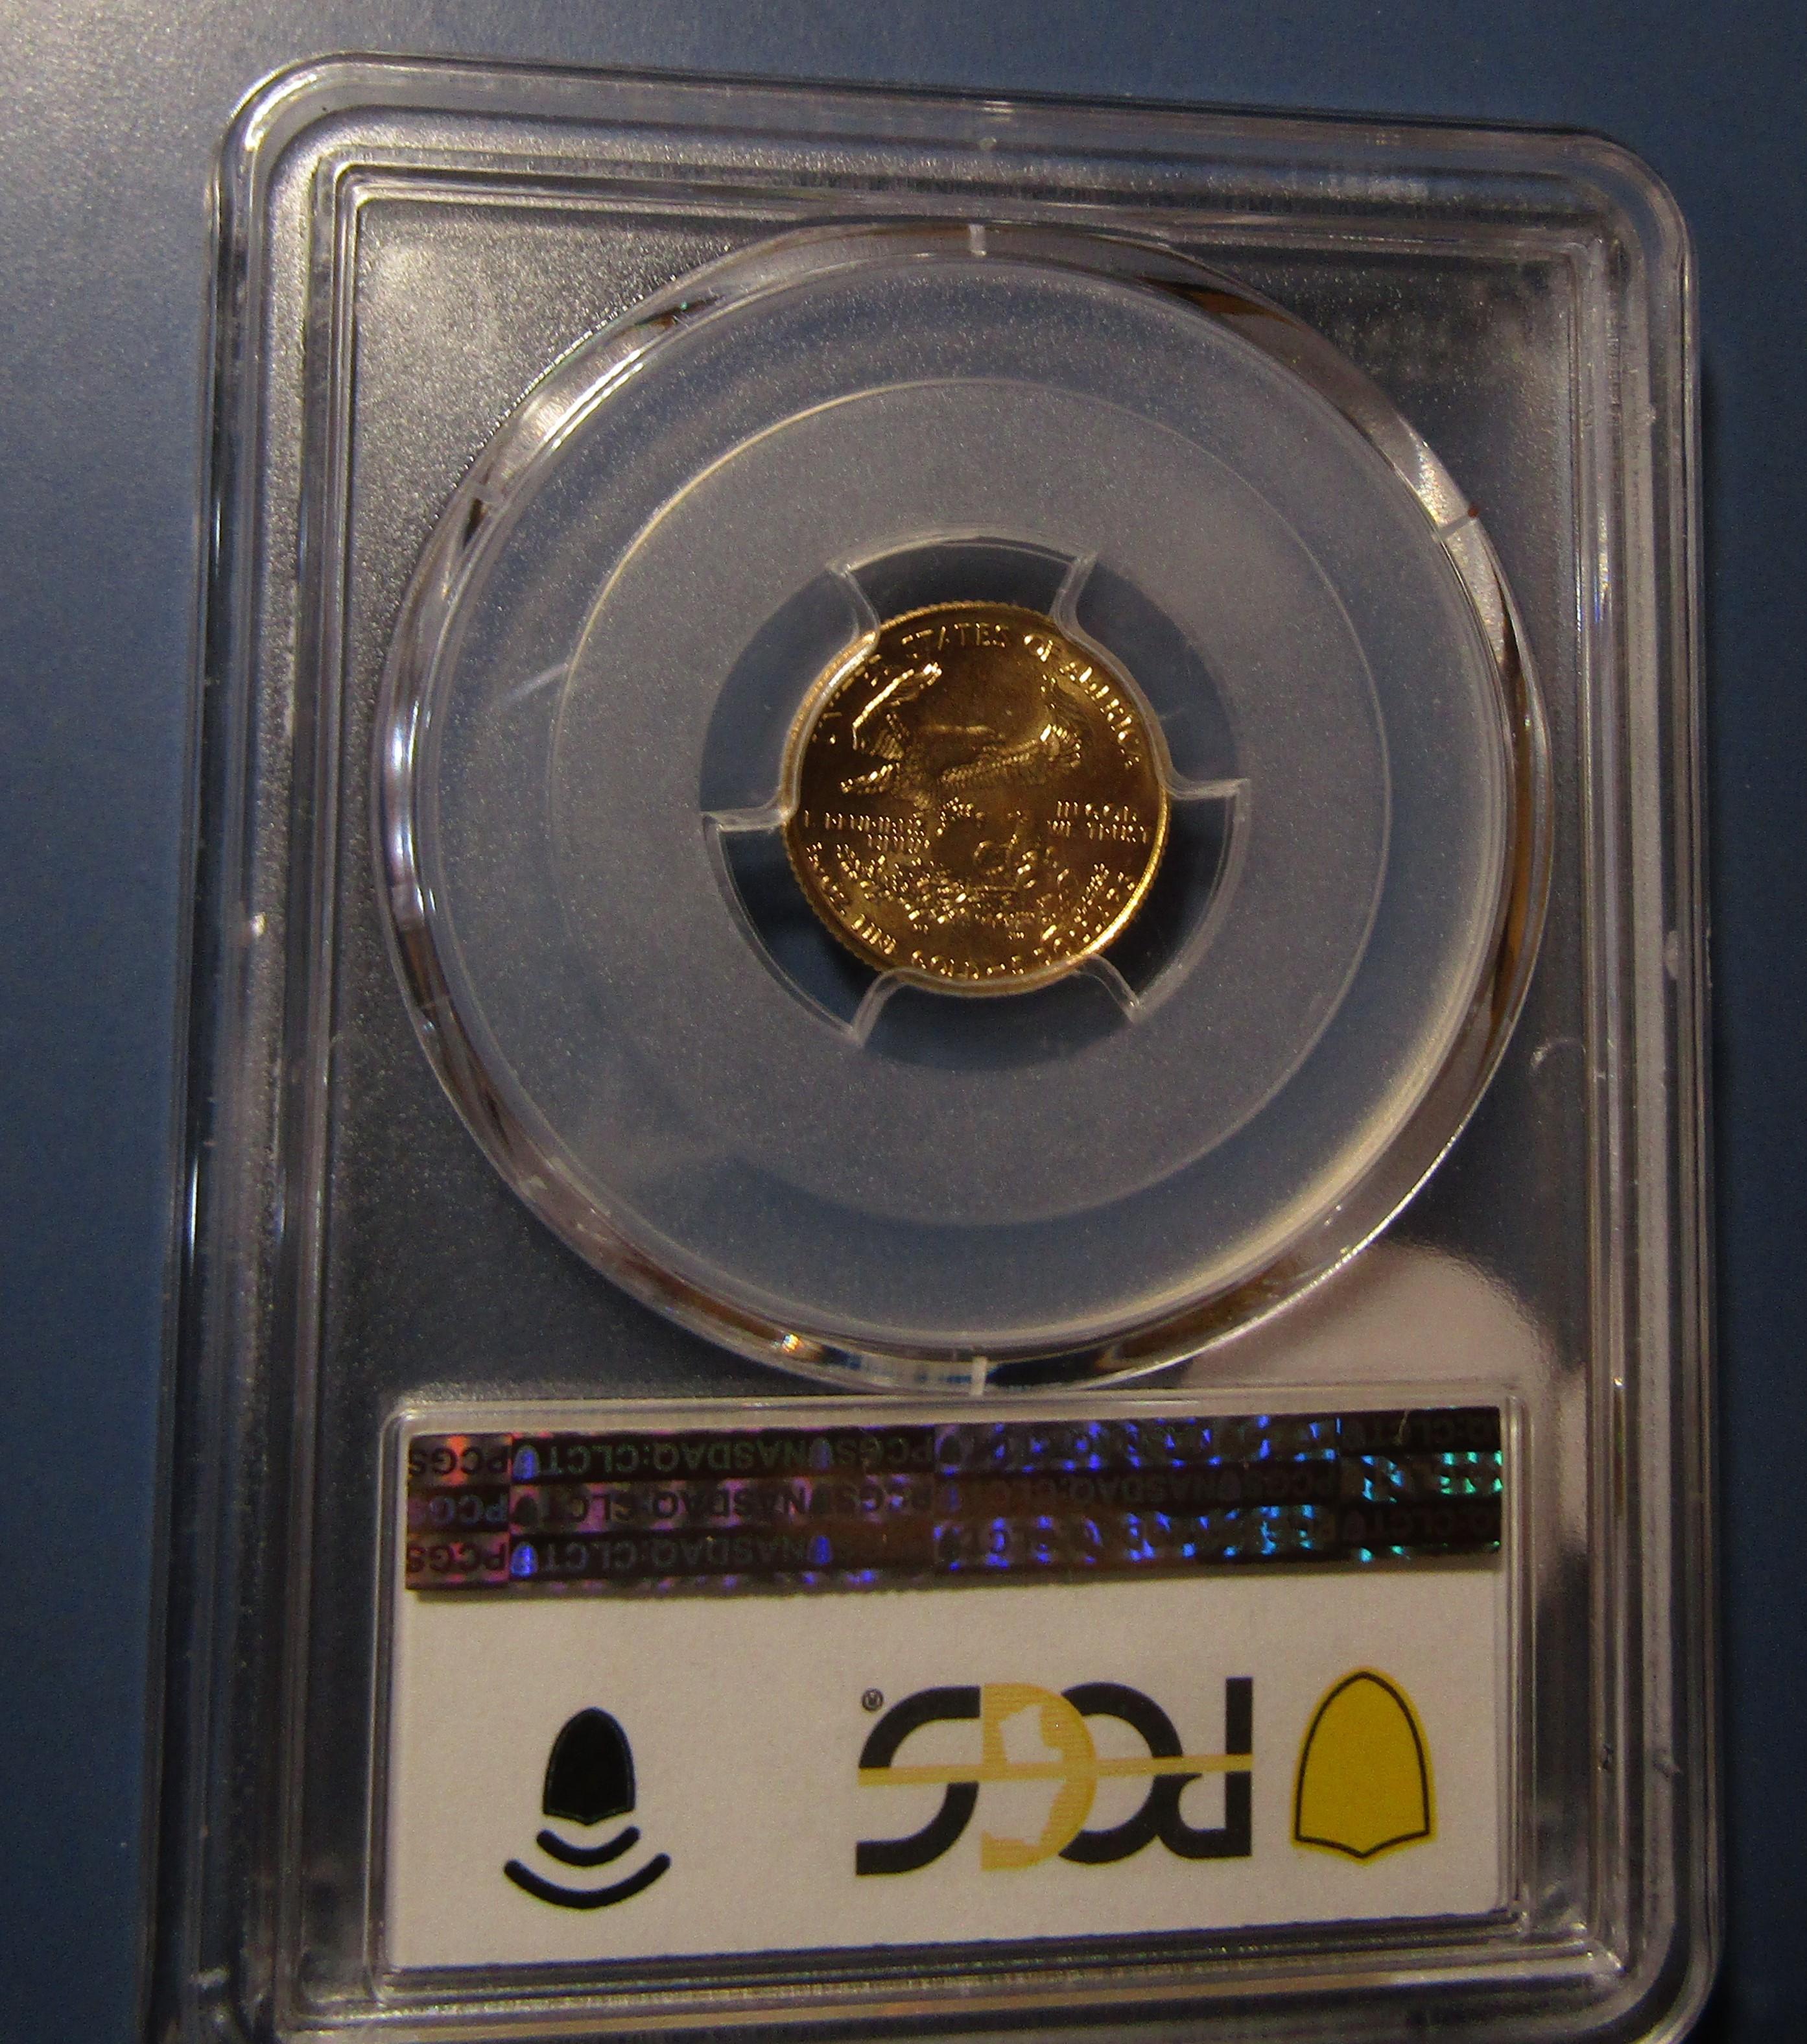 1999 $5.00 GOLD EAGLE PCGS MS-69